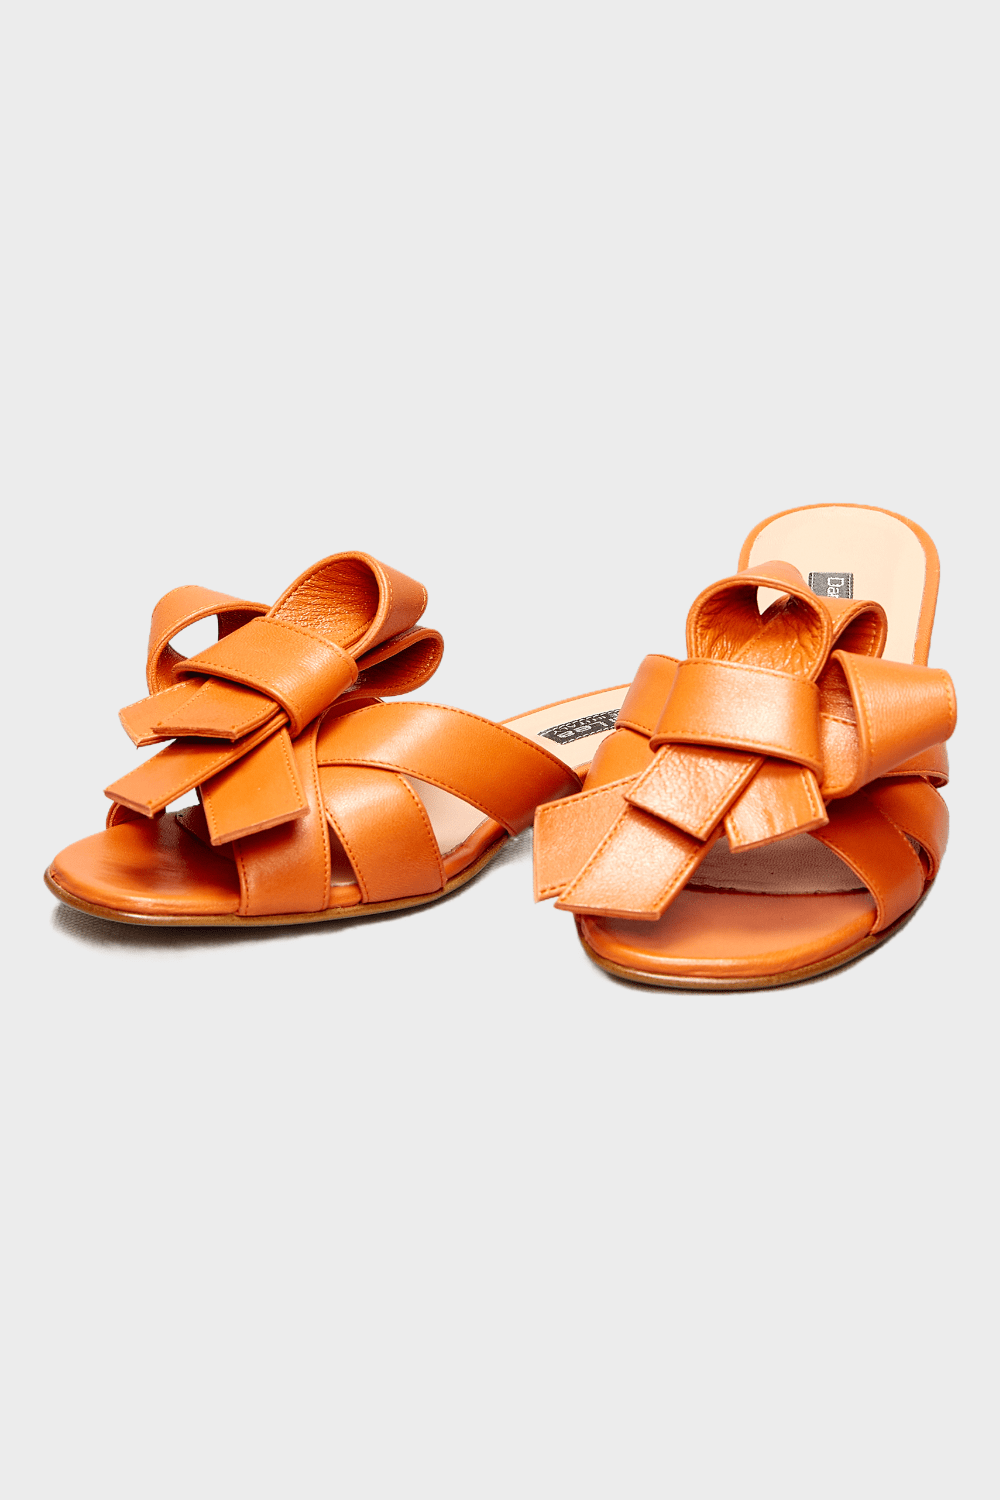 Danilo di Lea by Roselina SHOES Zoe Orange Leather Bow Sandals